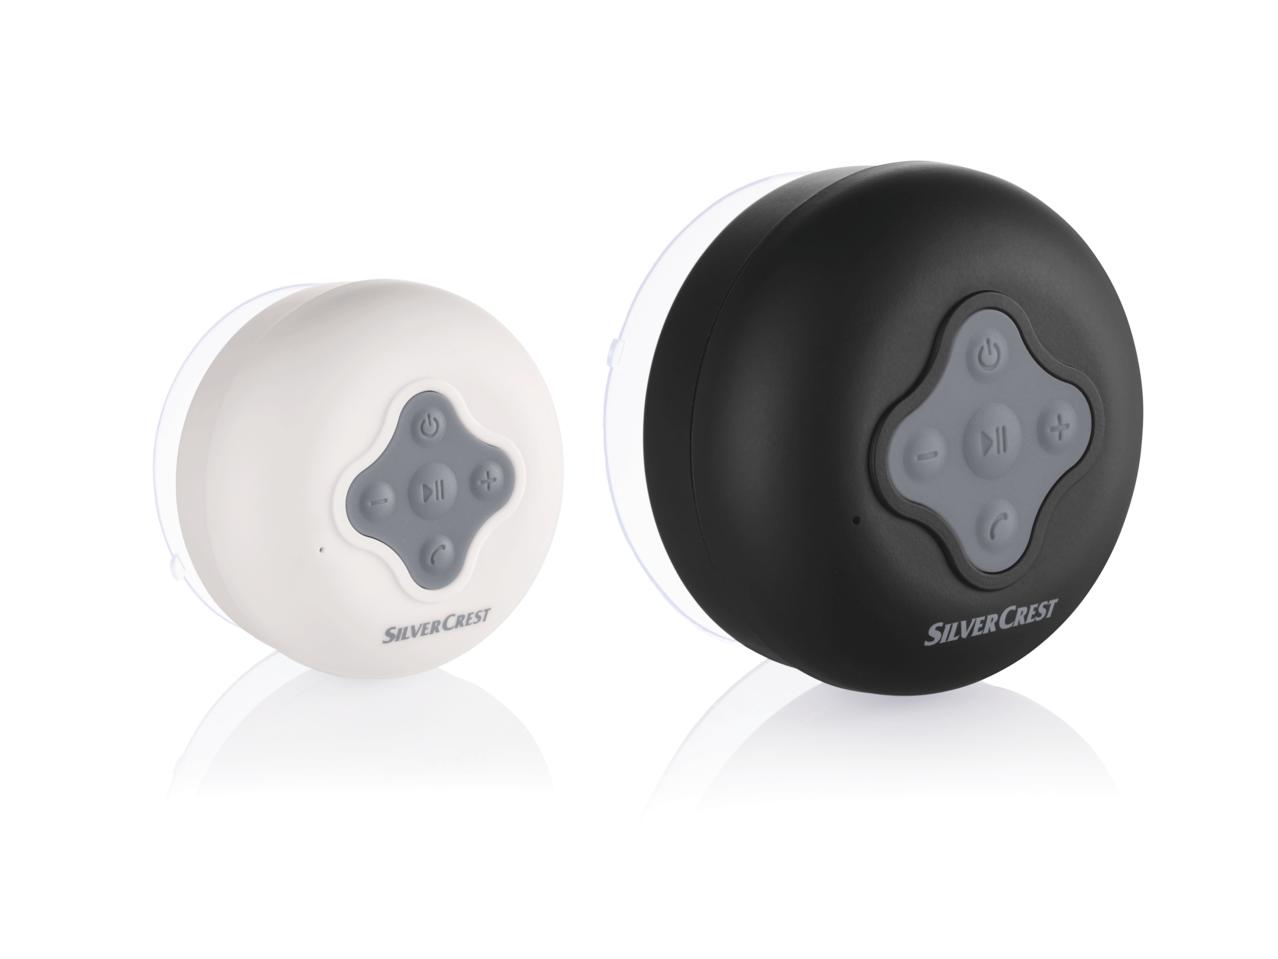 SILVERCREST(R) Bluetooth Bathroom Speaker